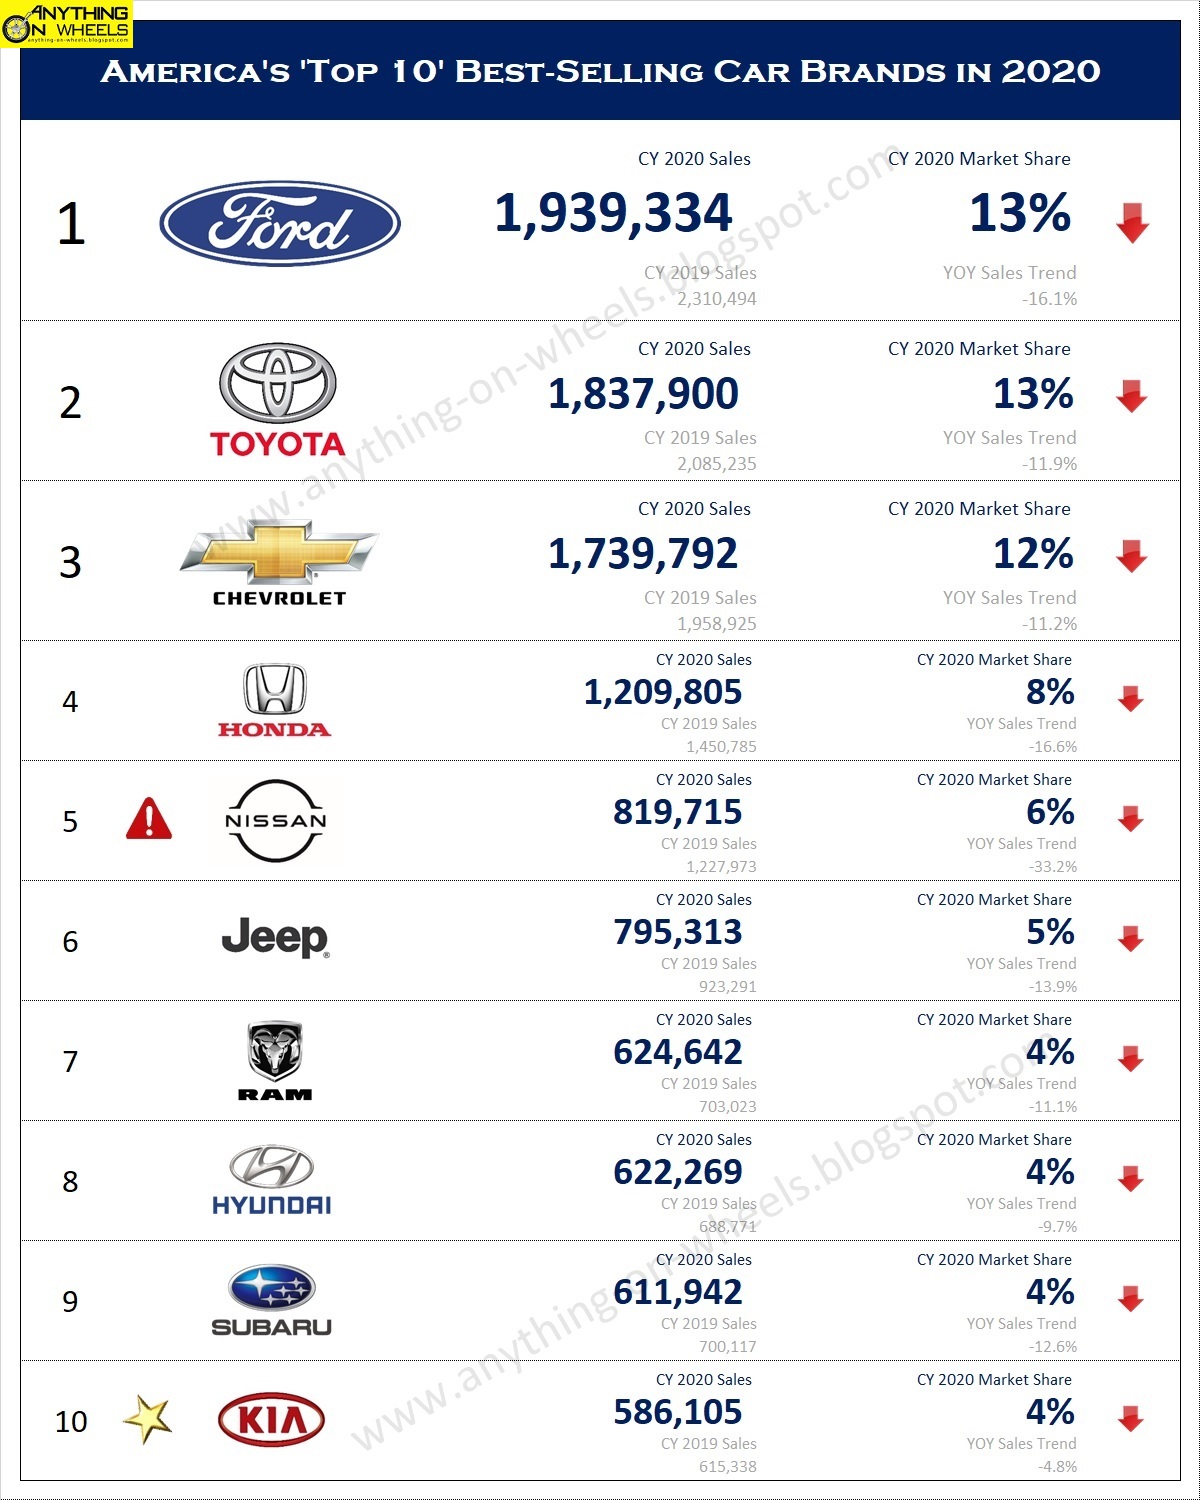 America's Best-Selling Car Brands in 2020